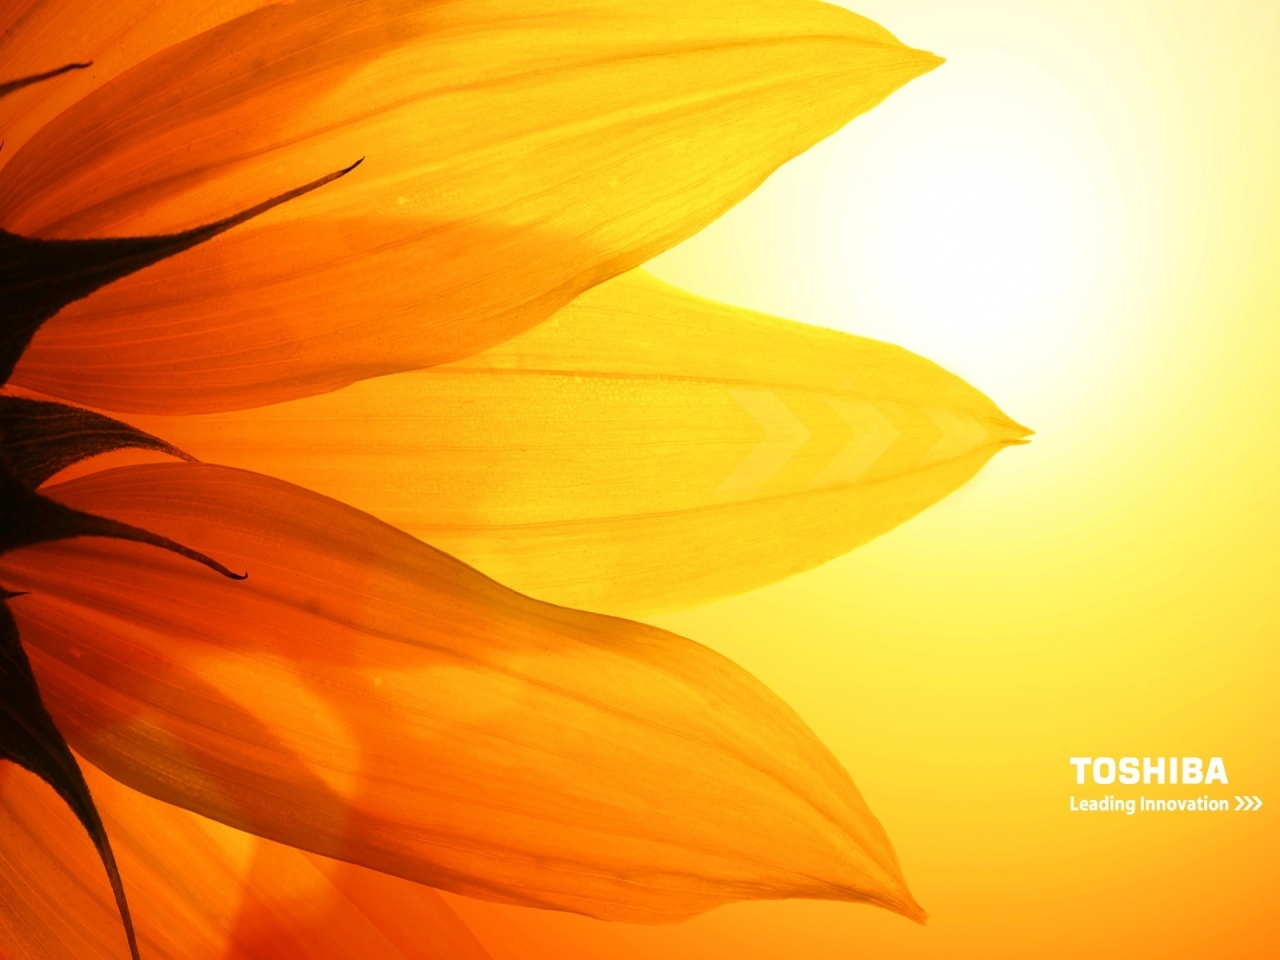 Toshiba sunflower for 1280 x 960 resolution